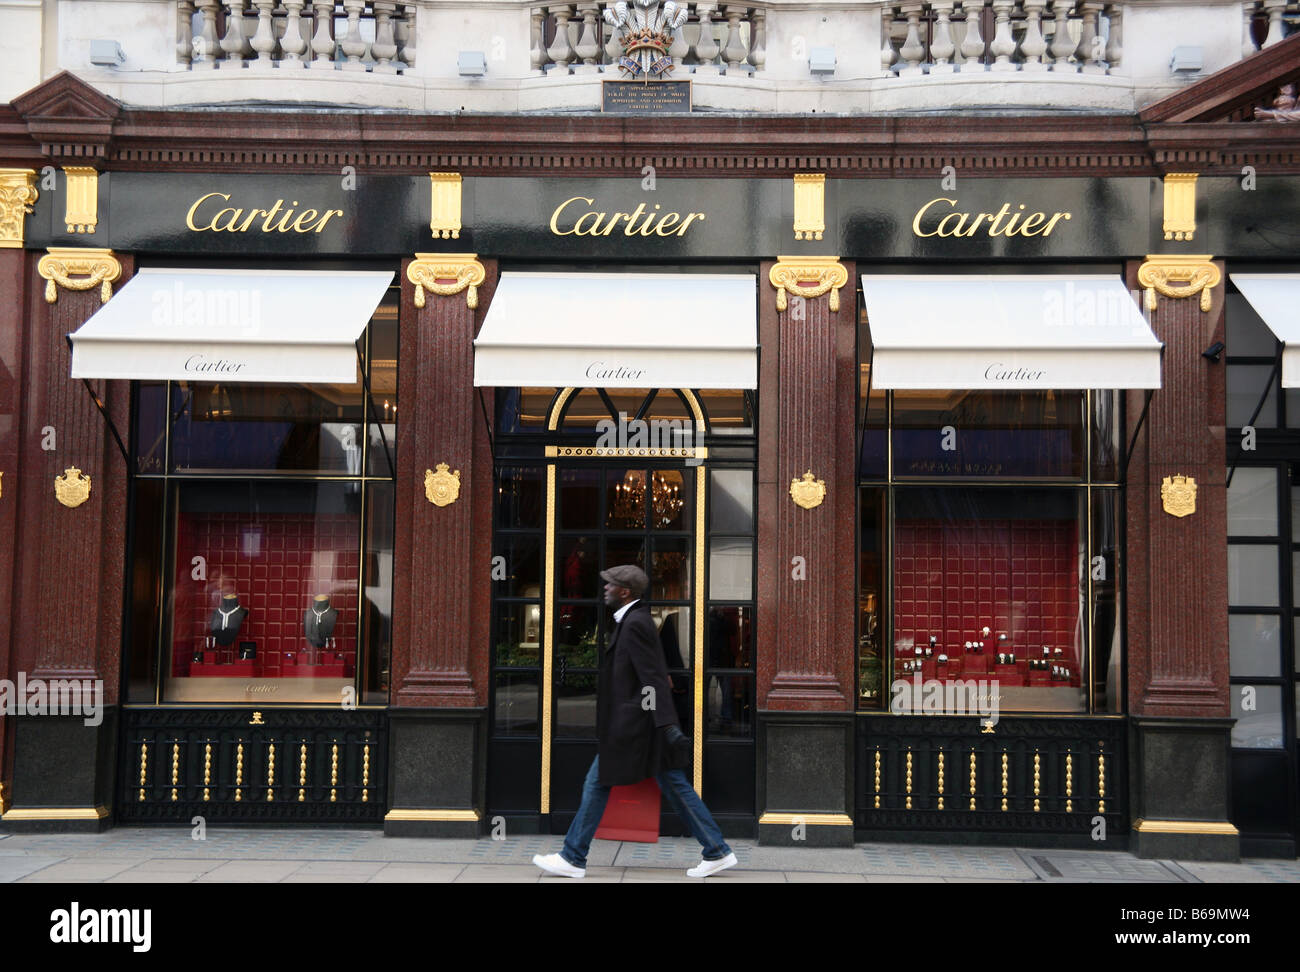 cartier flagship store london